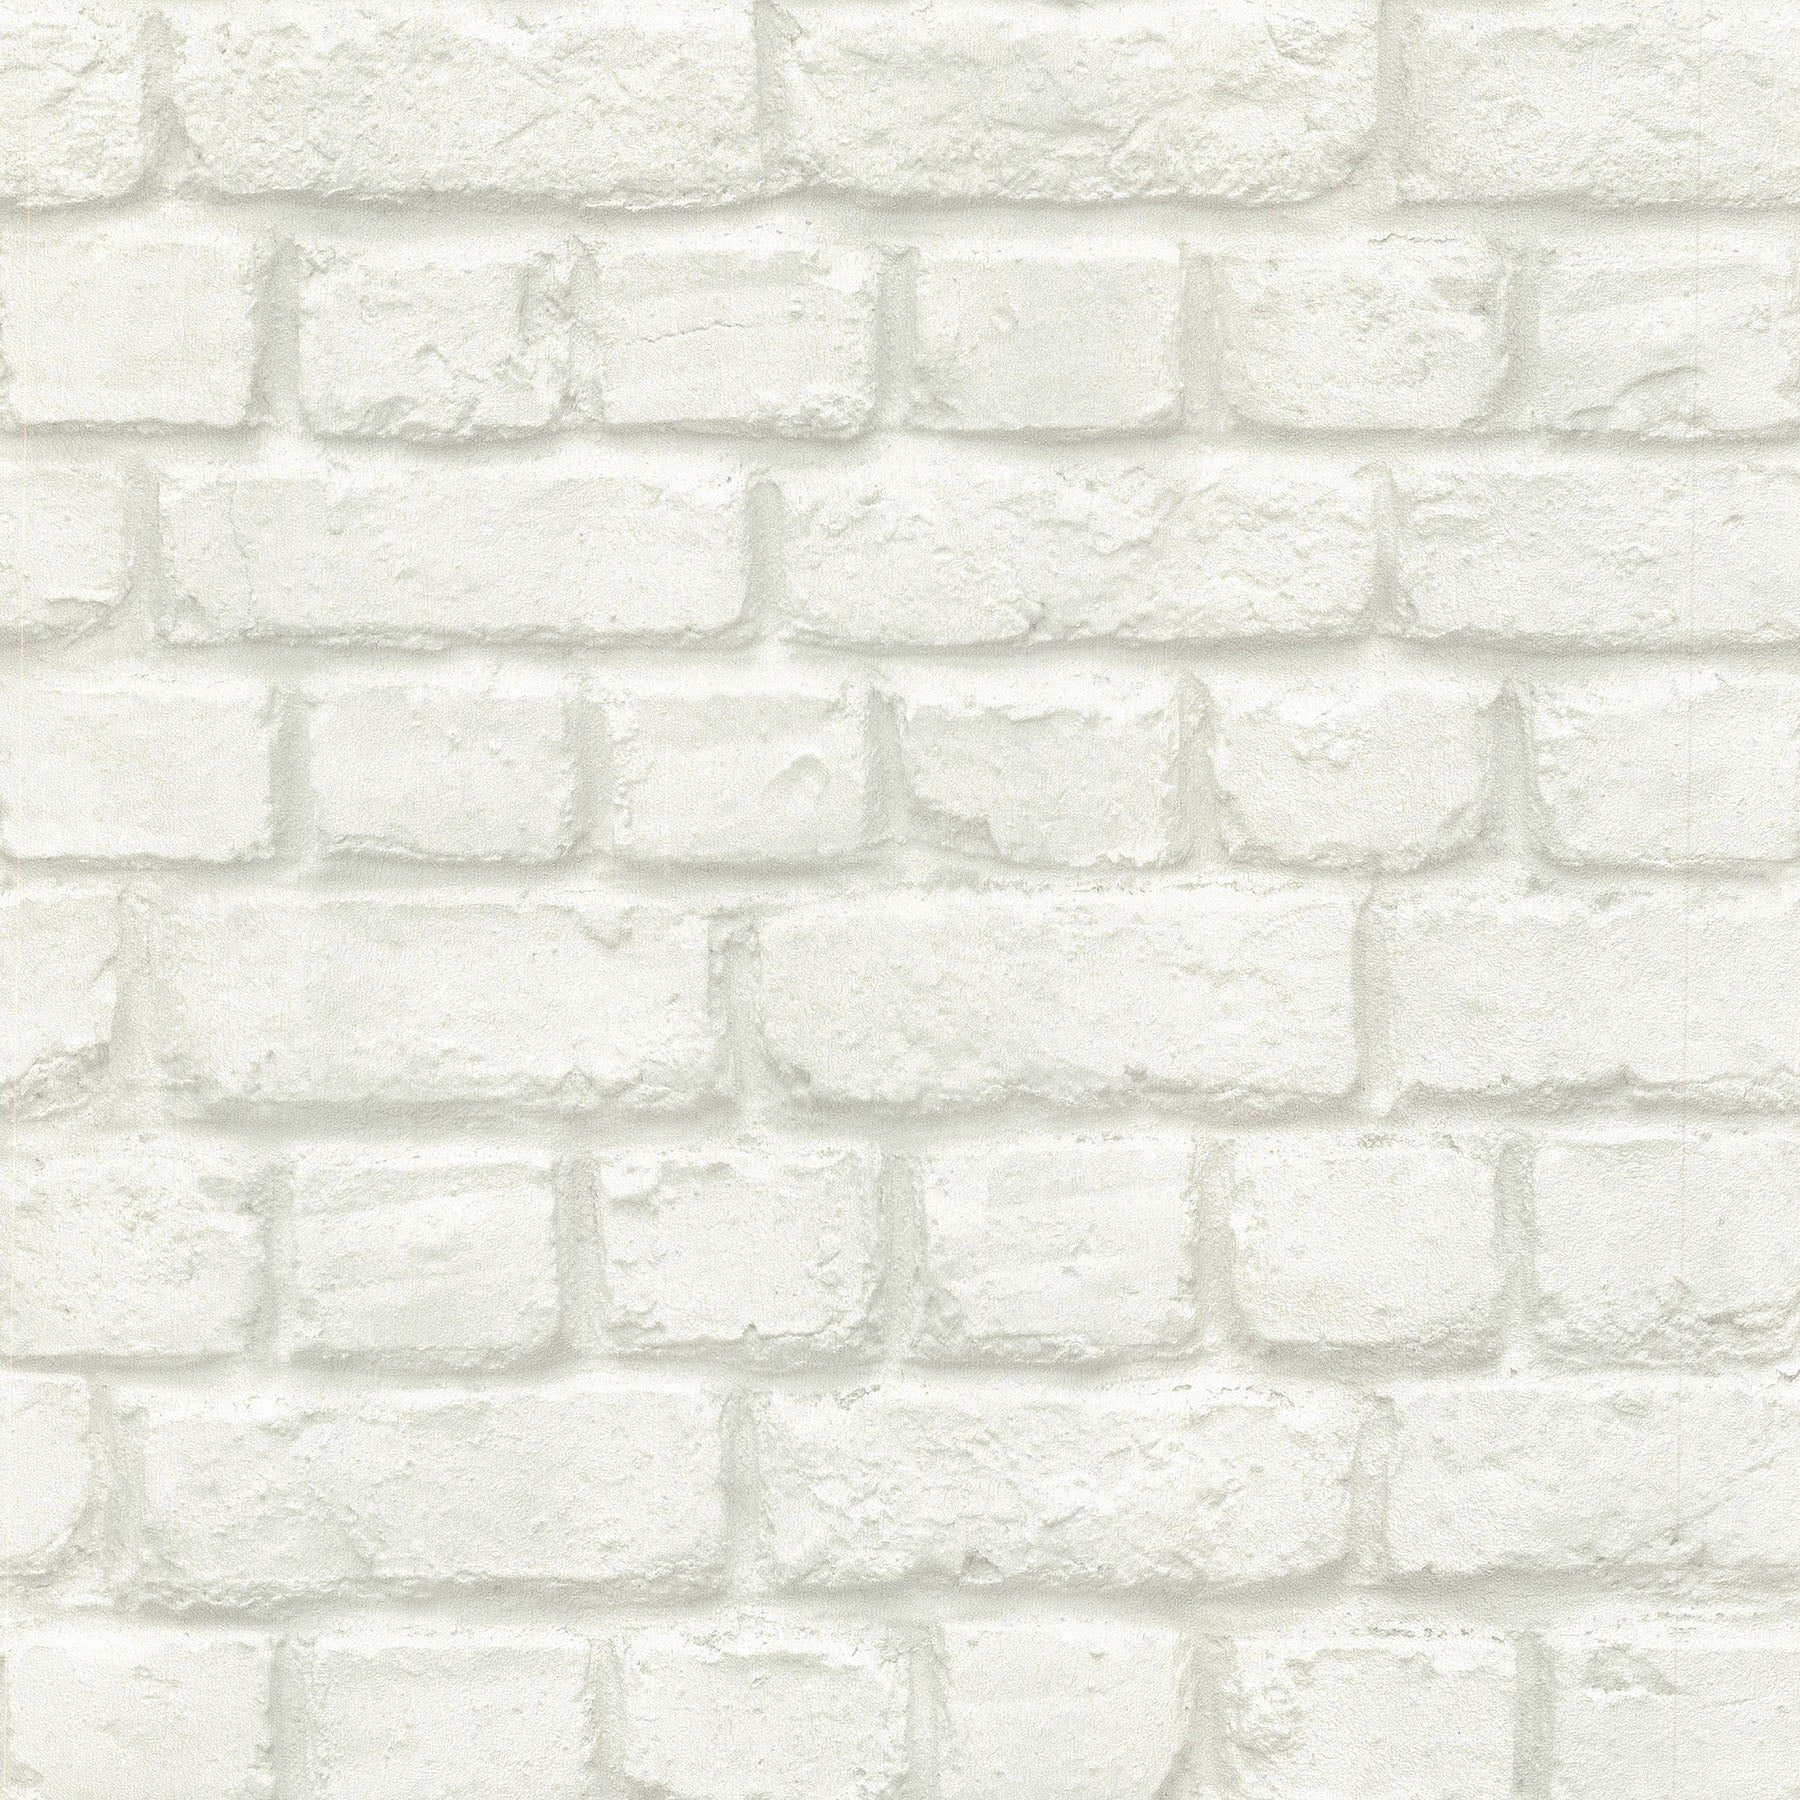 Purchase 2773-587203 Neutral Black White Whites Off-Whites Brick Wallpaper by Advantage